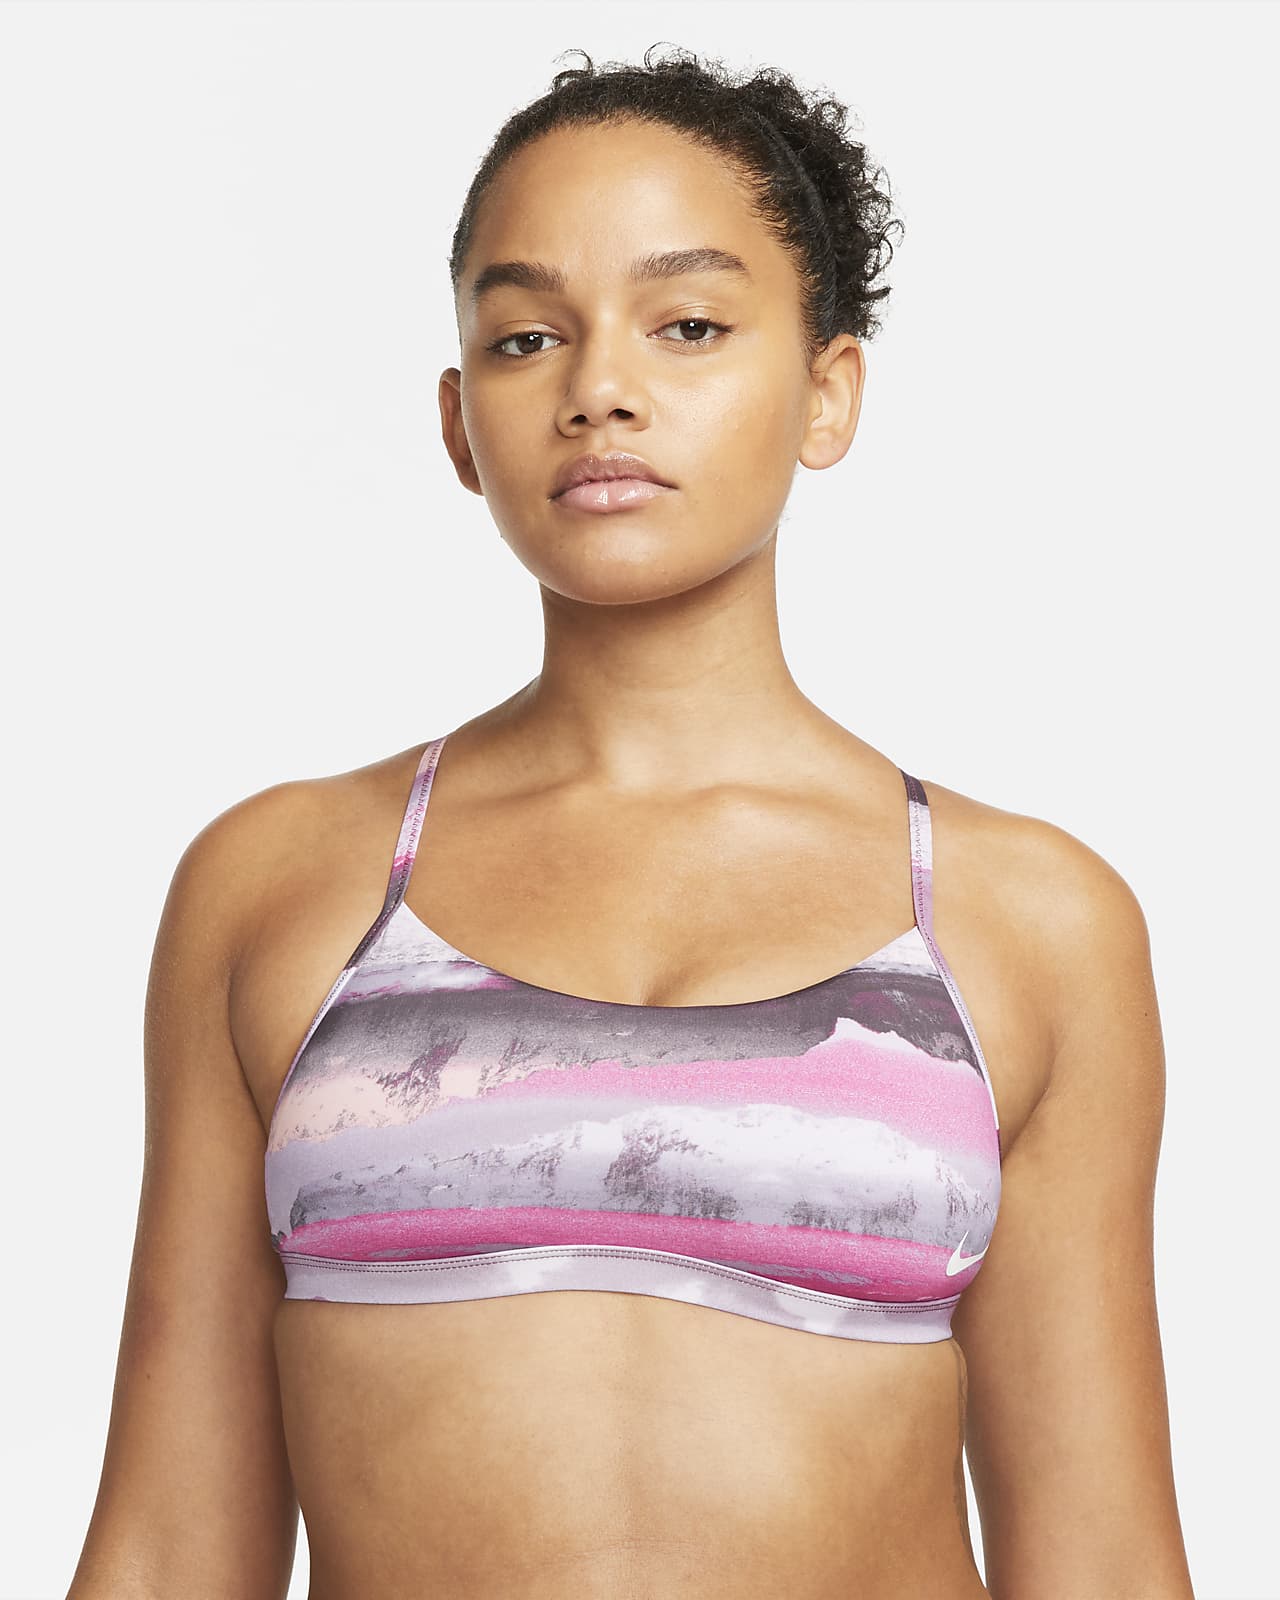 doble Ocurrencia factible Top de bikini con tirantes de espalda cruzada Nike Adventure para mujer.  Nike.com